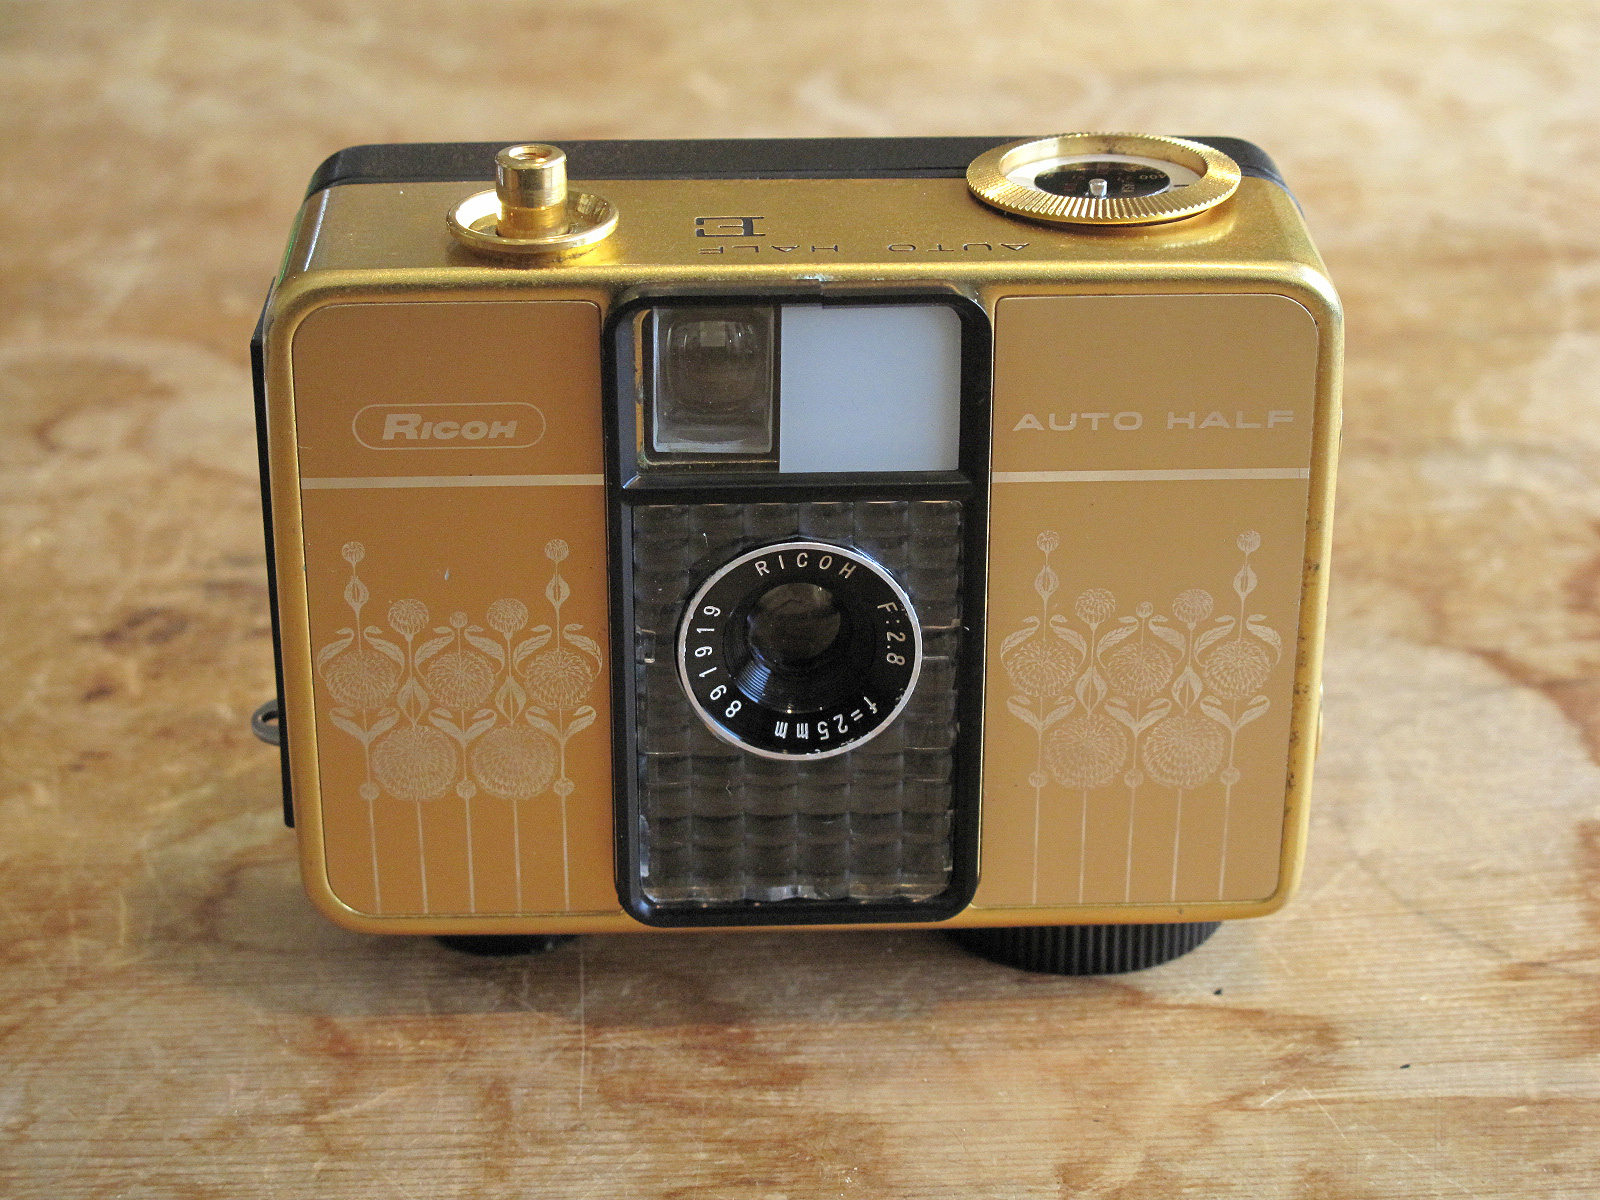 RICOH AUTOHALF E Gold | イエネコカメラ 名古屋市 中古フィルムカメラ